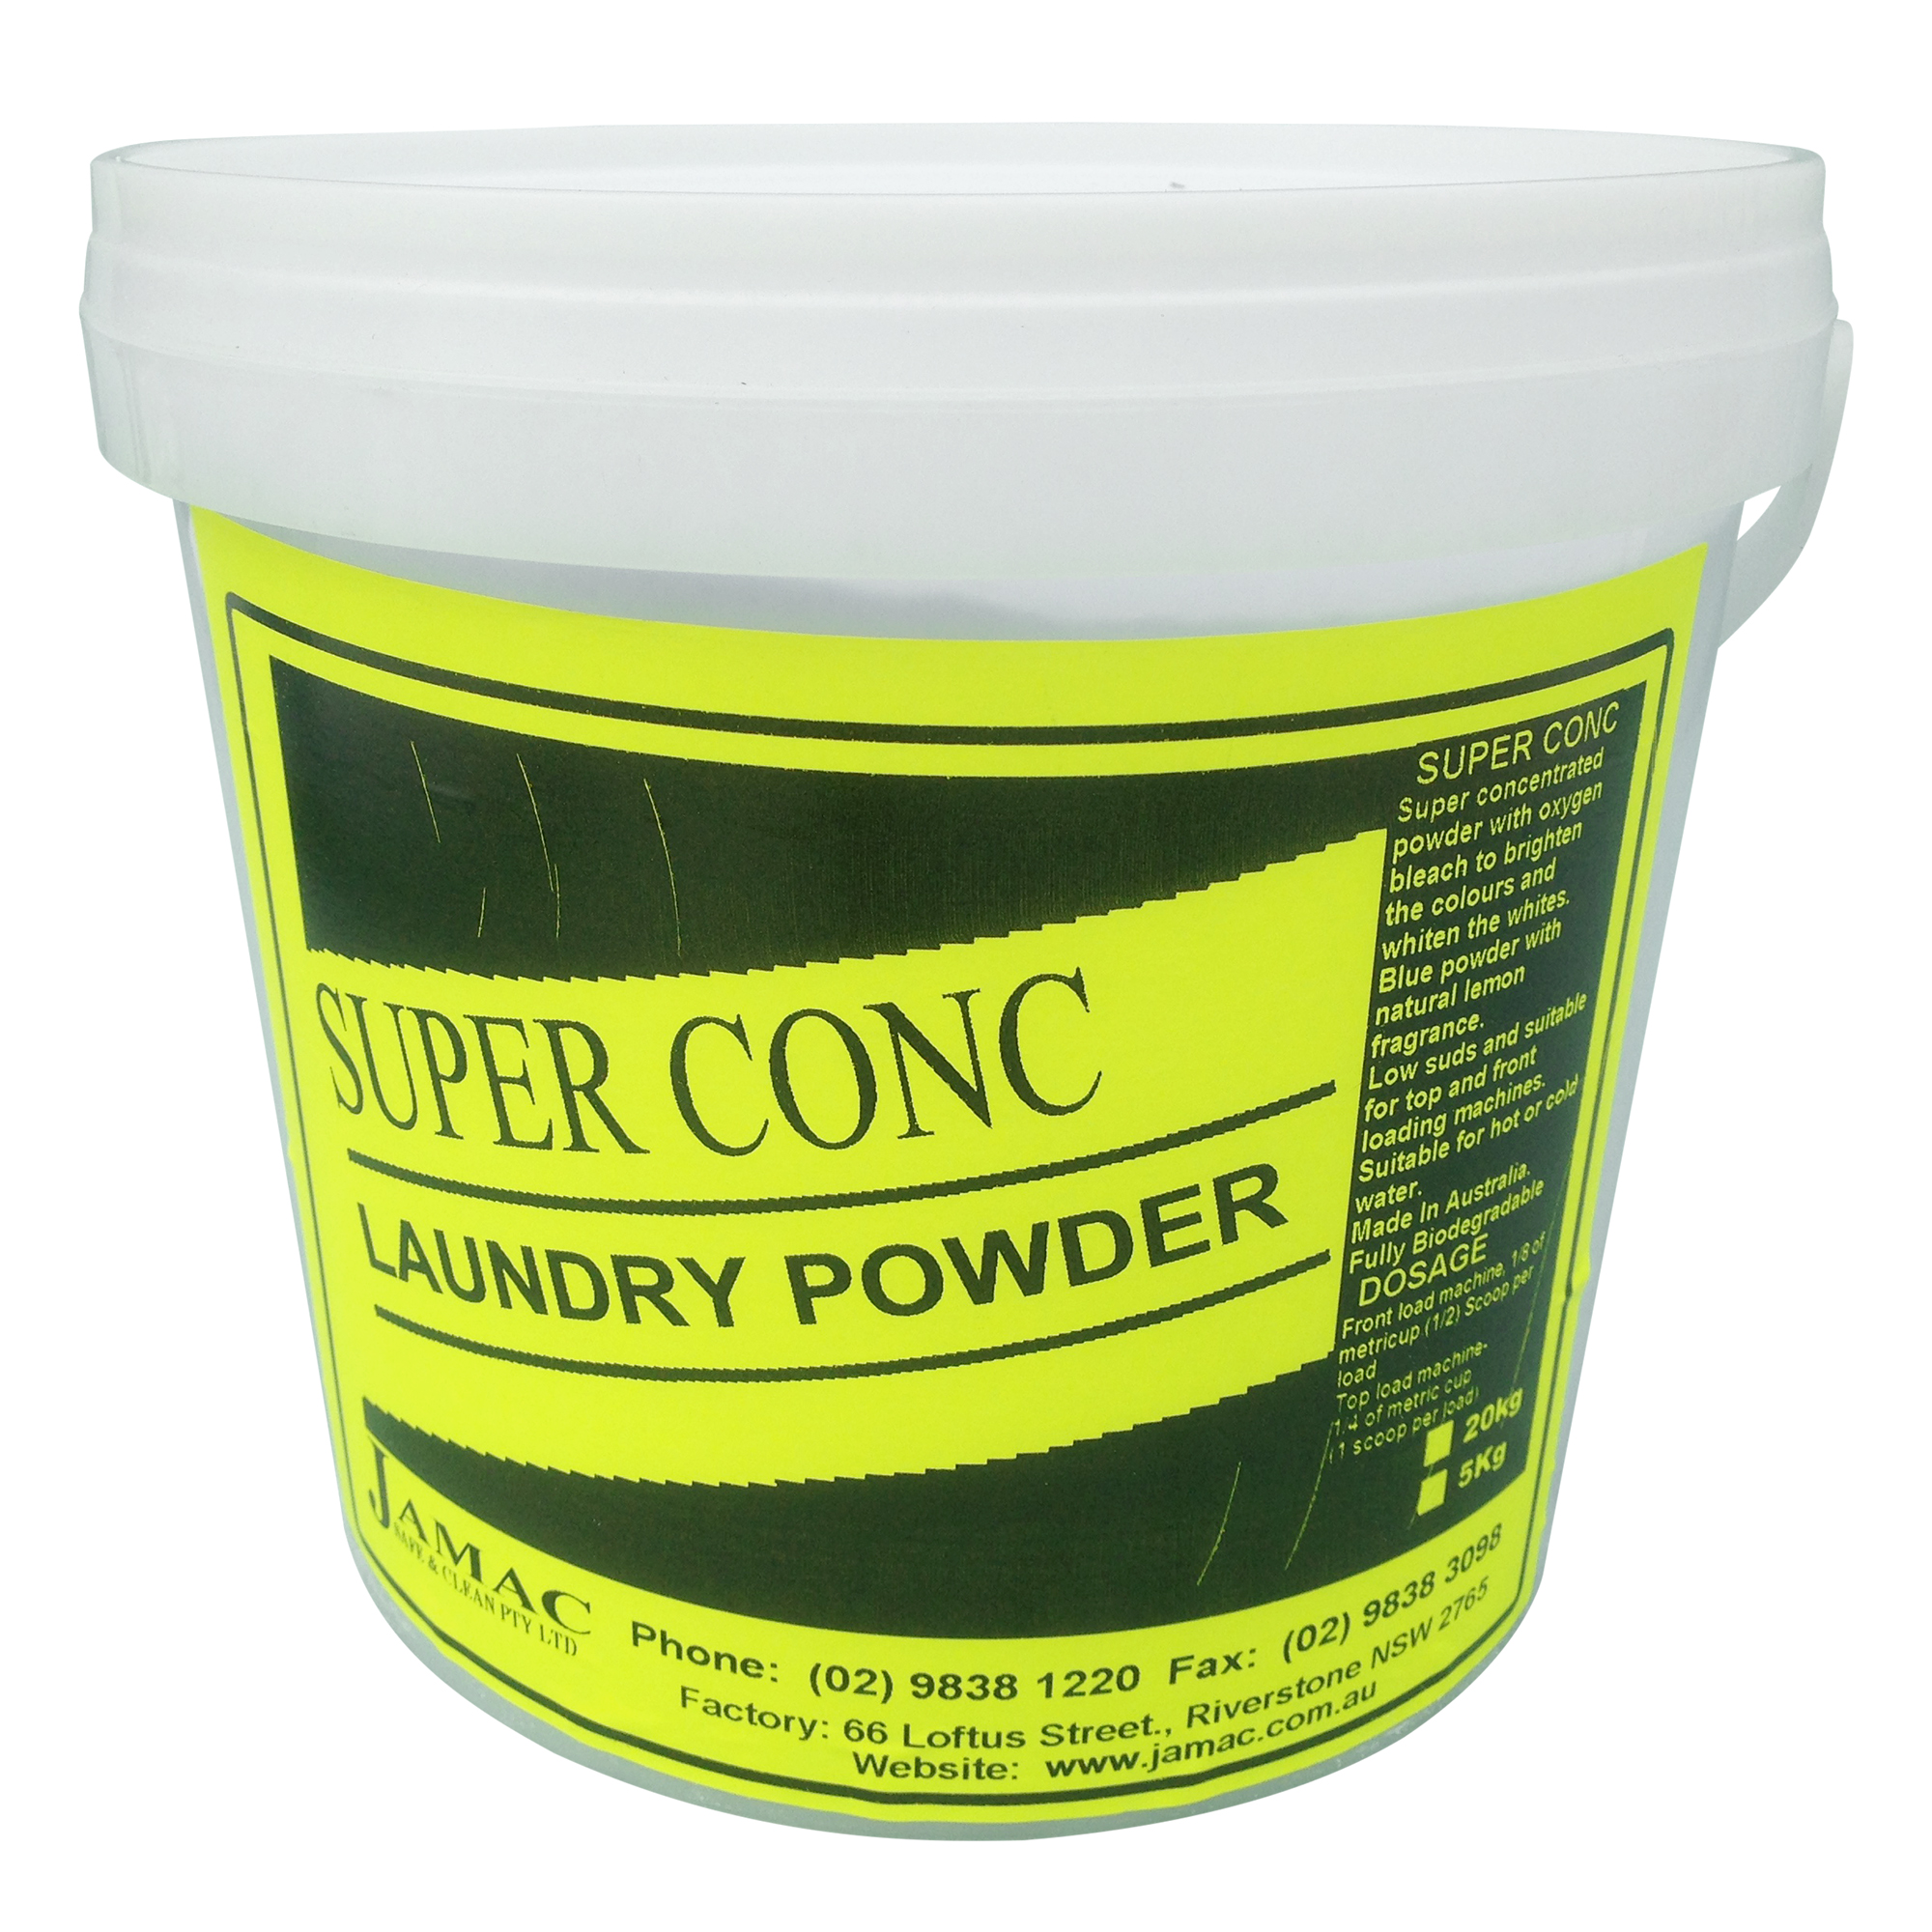 SUPER CONC Laundry Powder